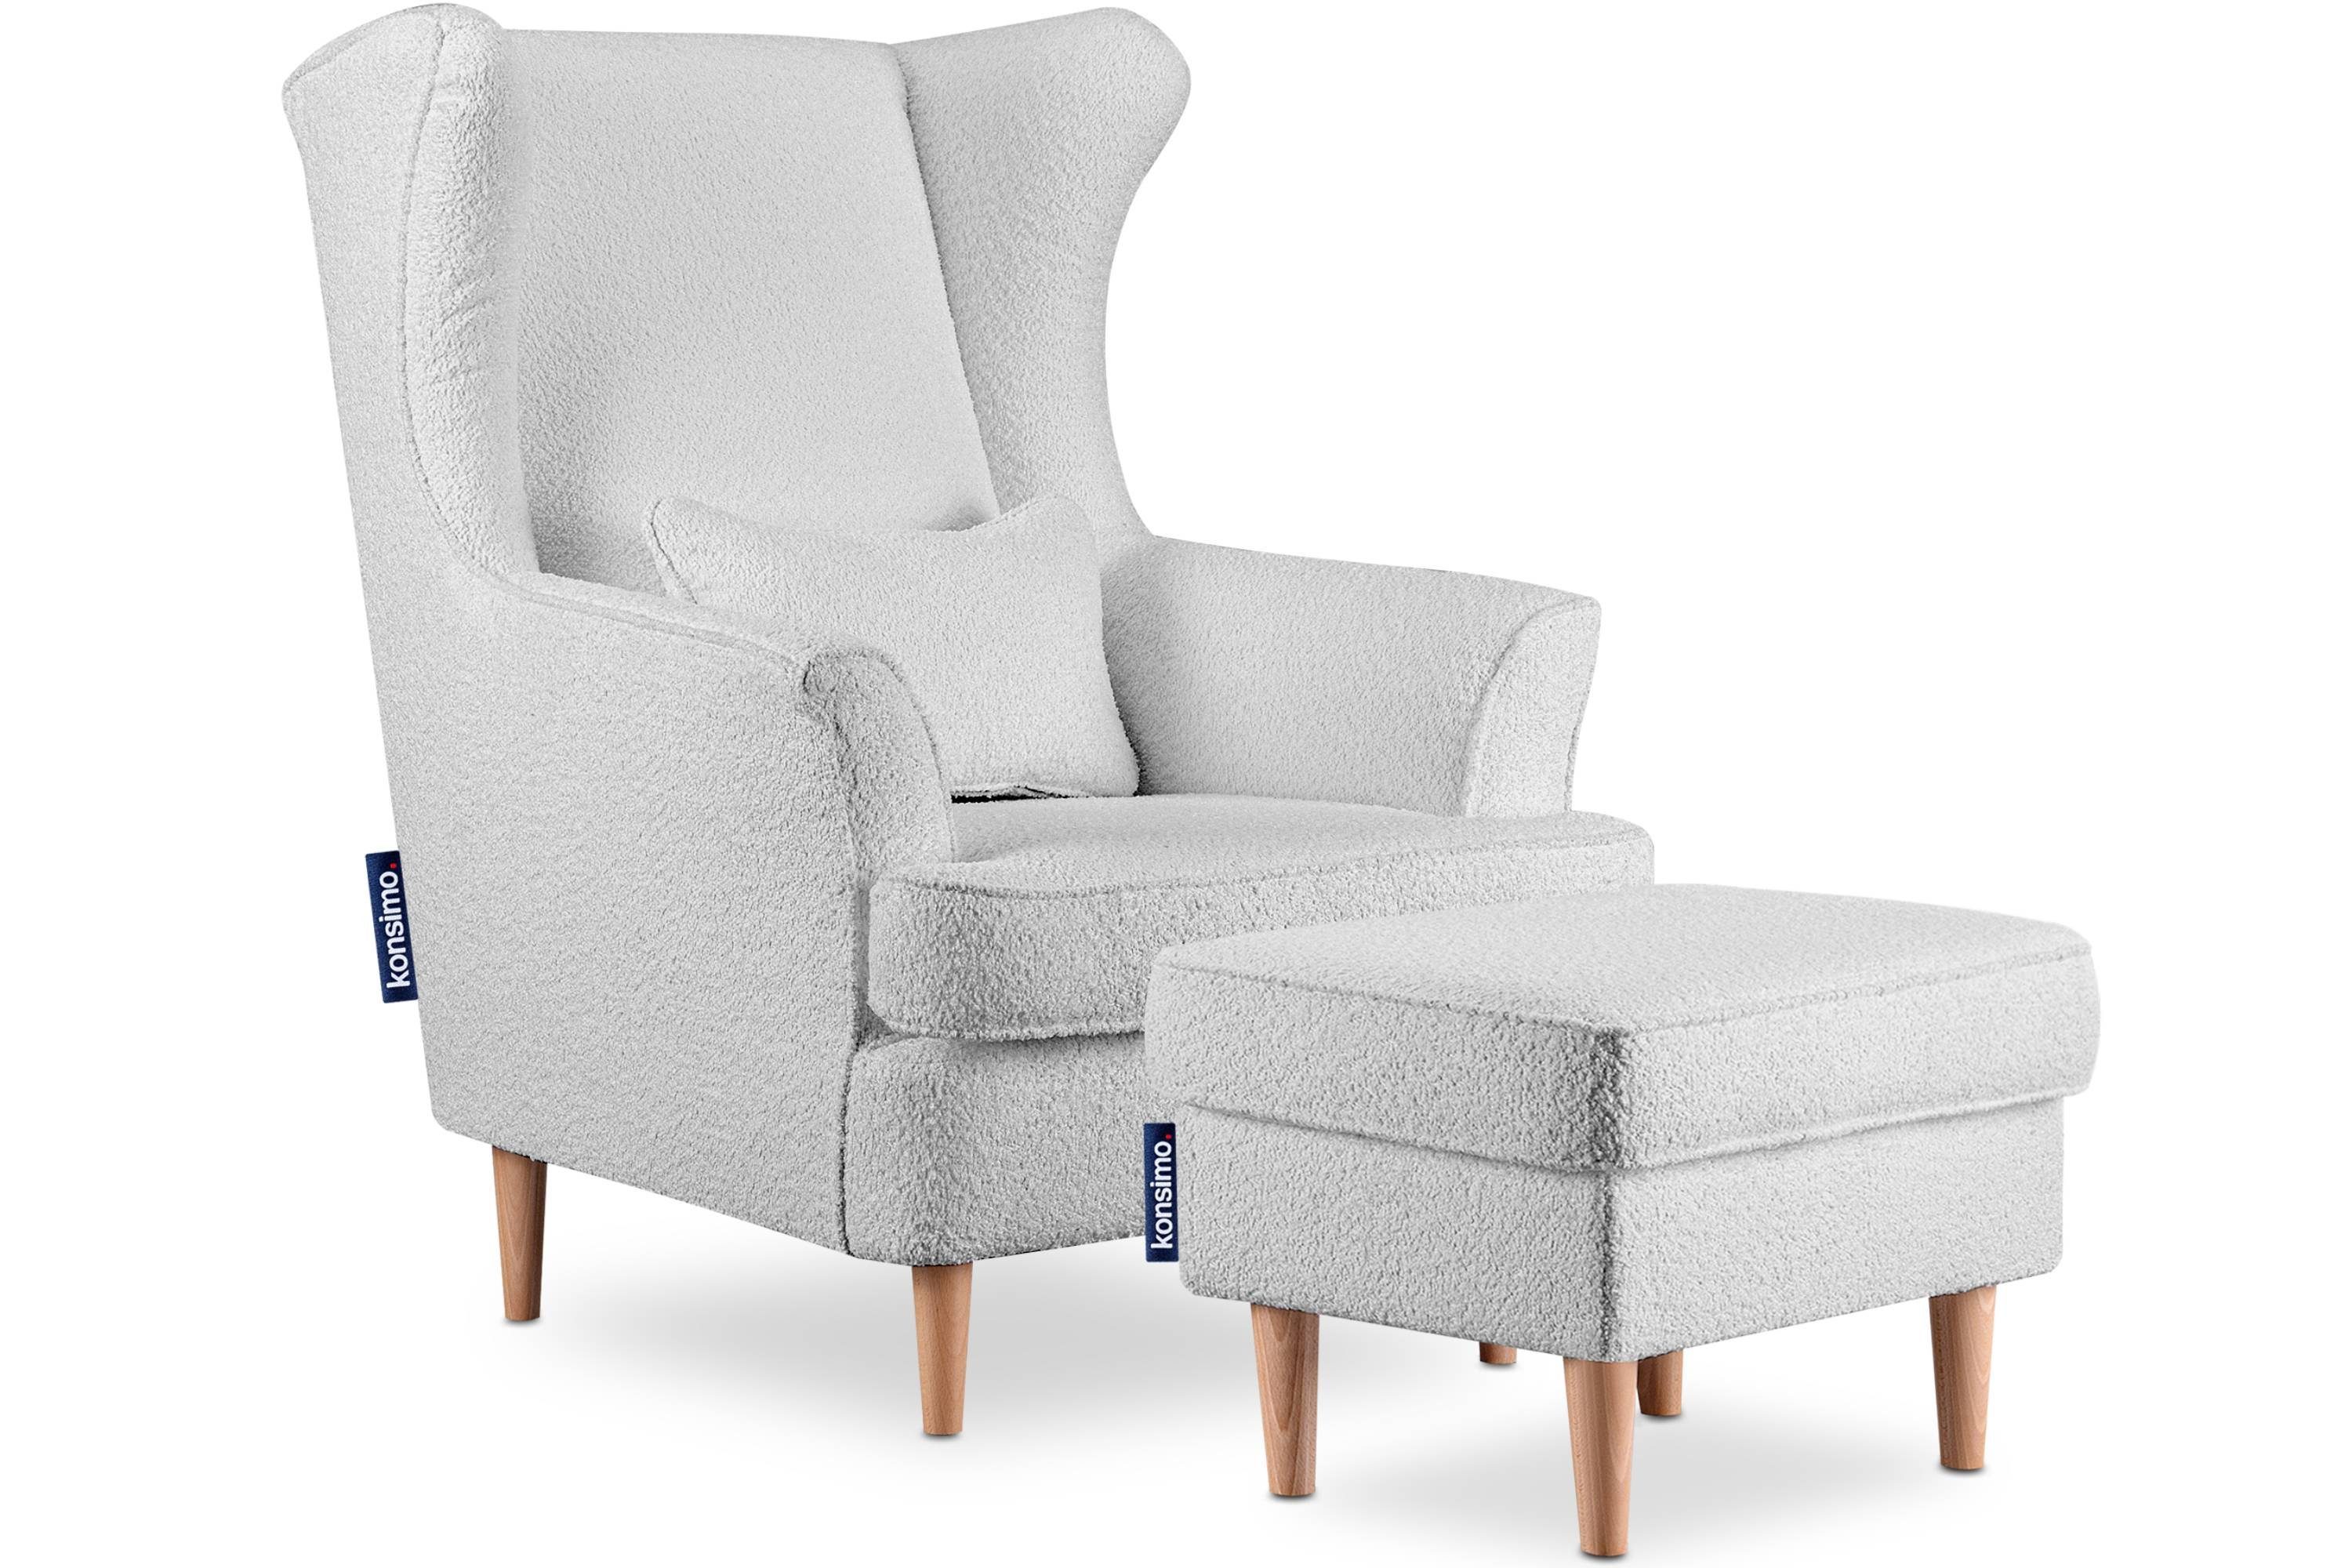 STRALIS Design, dekorativem inklusive Ohrensessel Füße, Konsimo Hocker, hohe zeitloses Sessel Kissen mit